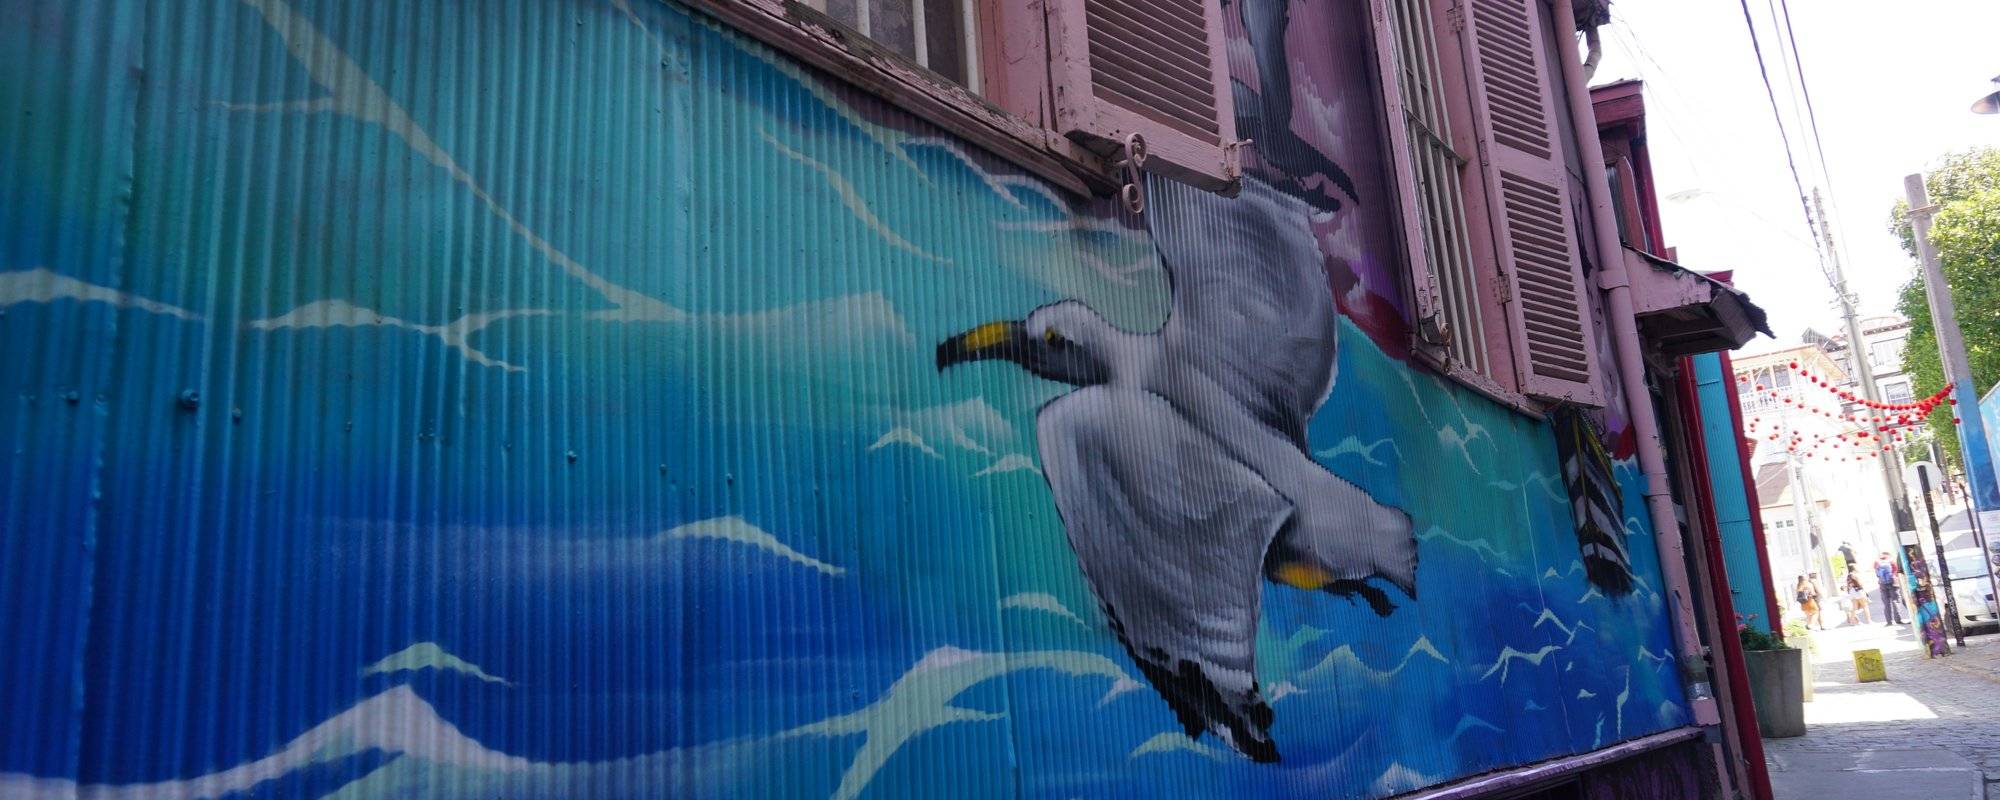 Street-Art I have seen in South America so far!